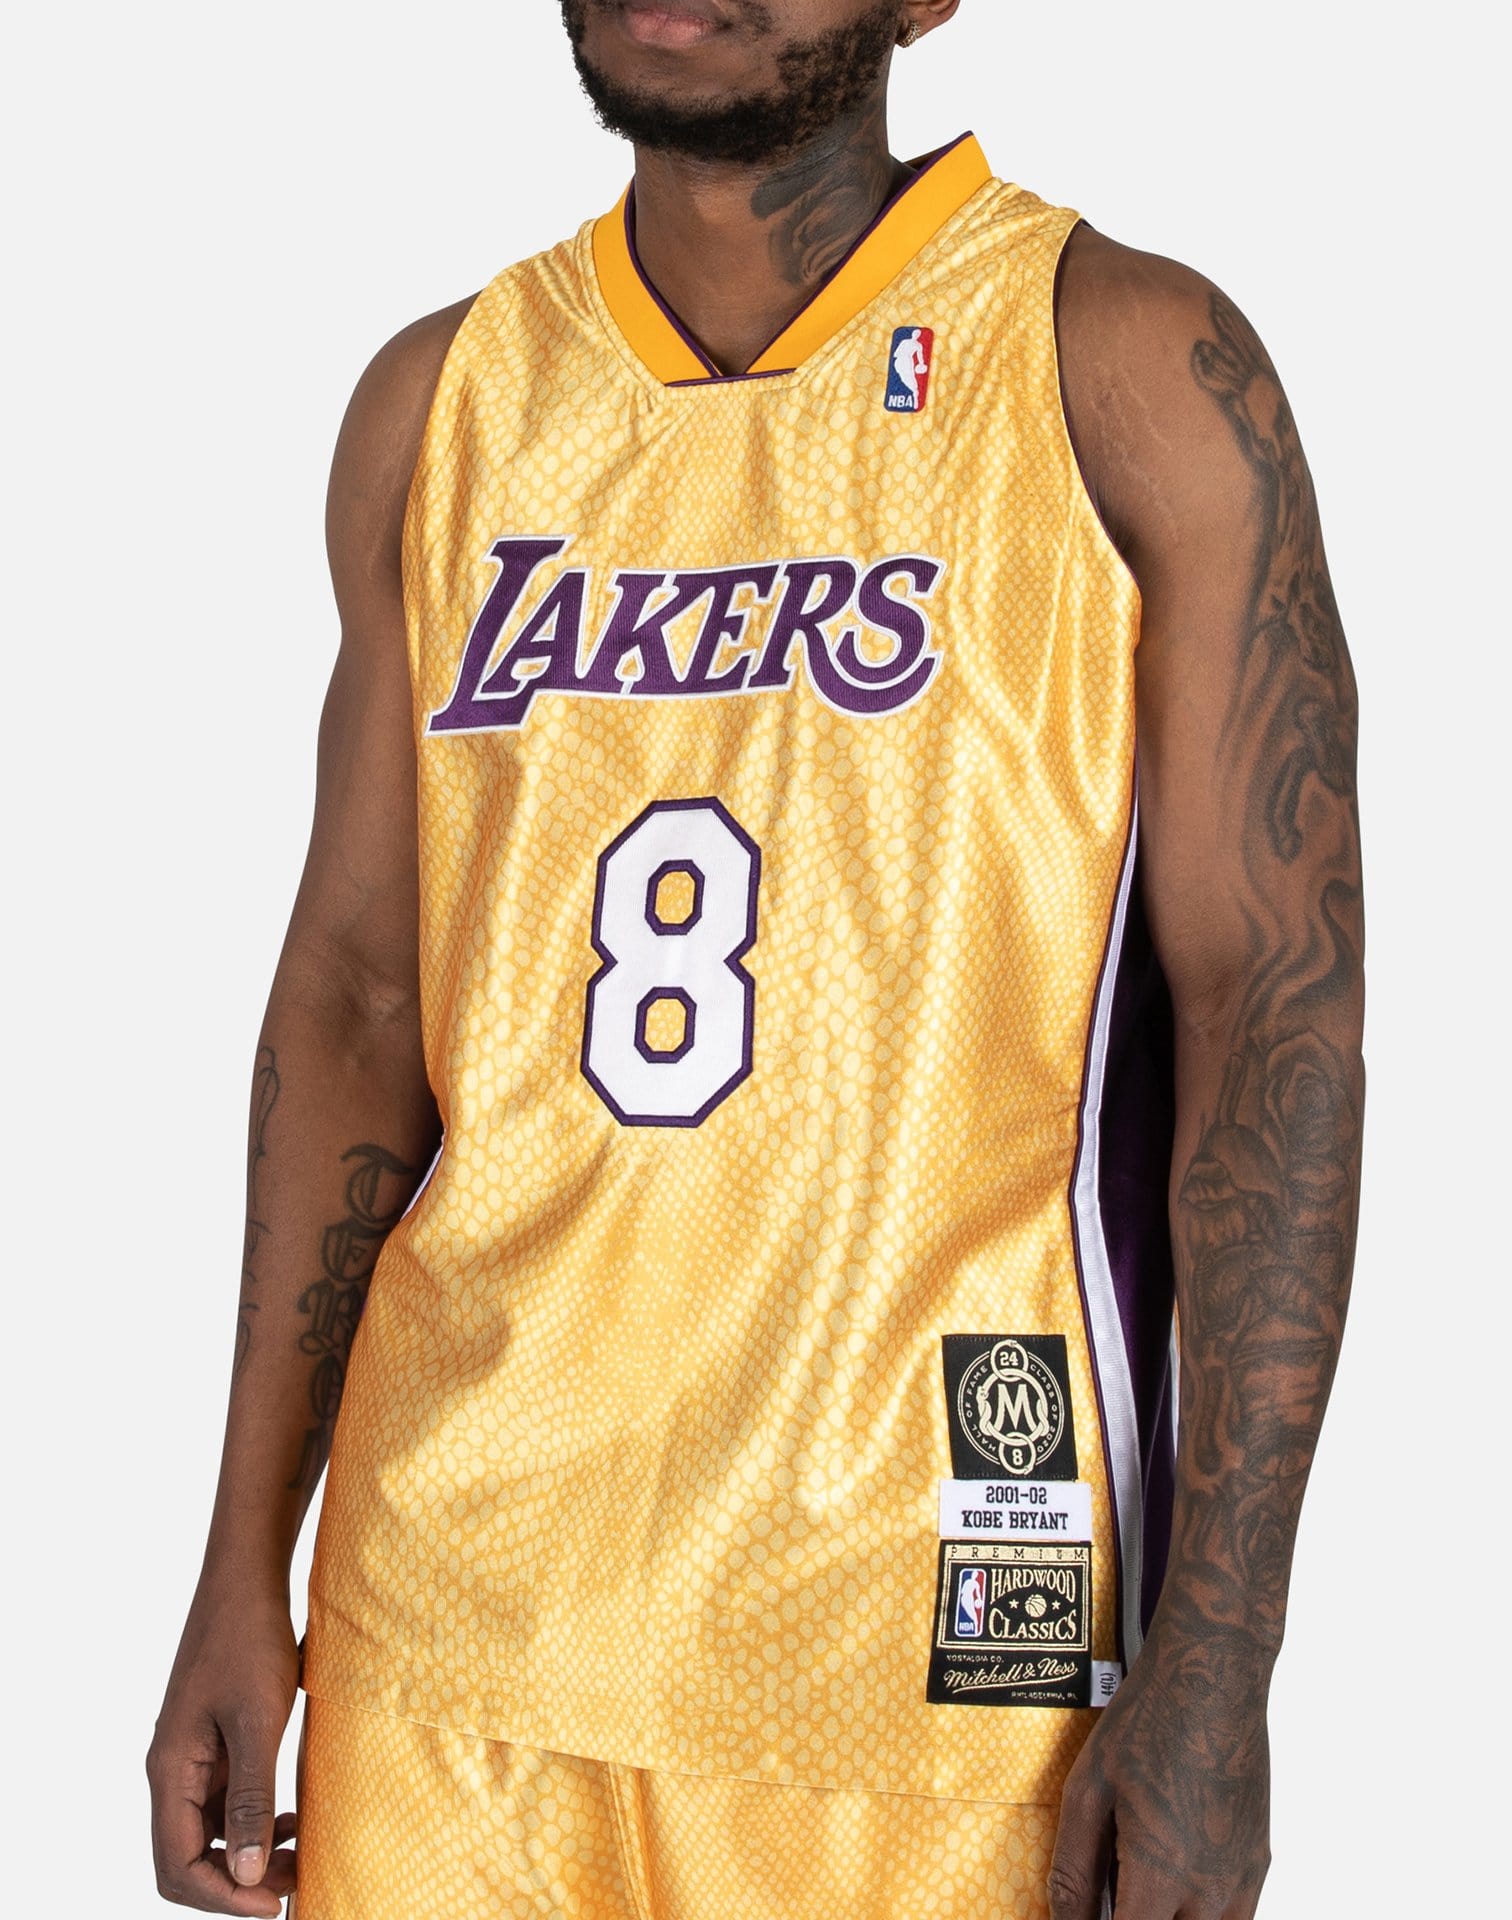 LA Lakers Adidas Reversible Practice Shooting Warmup Jersey Kobe